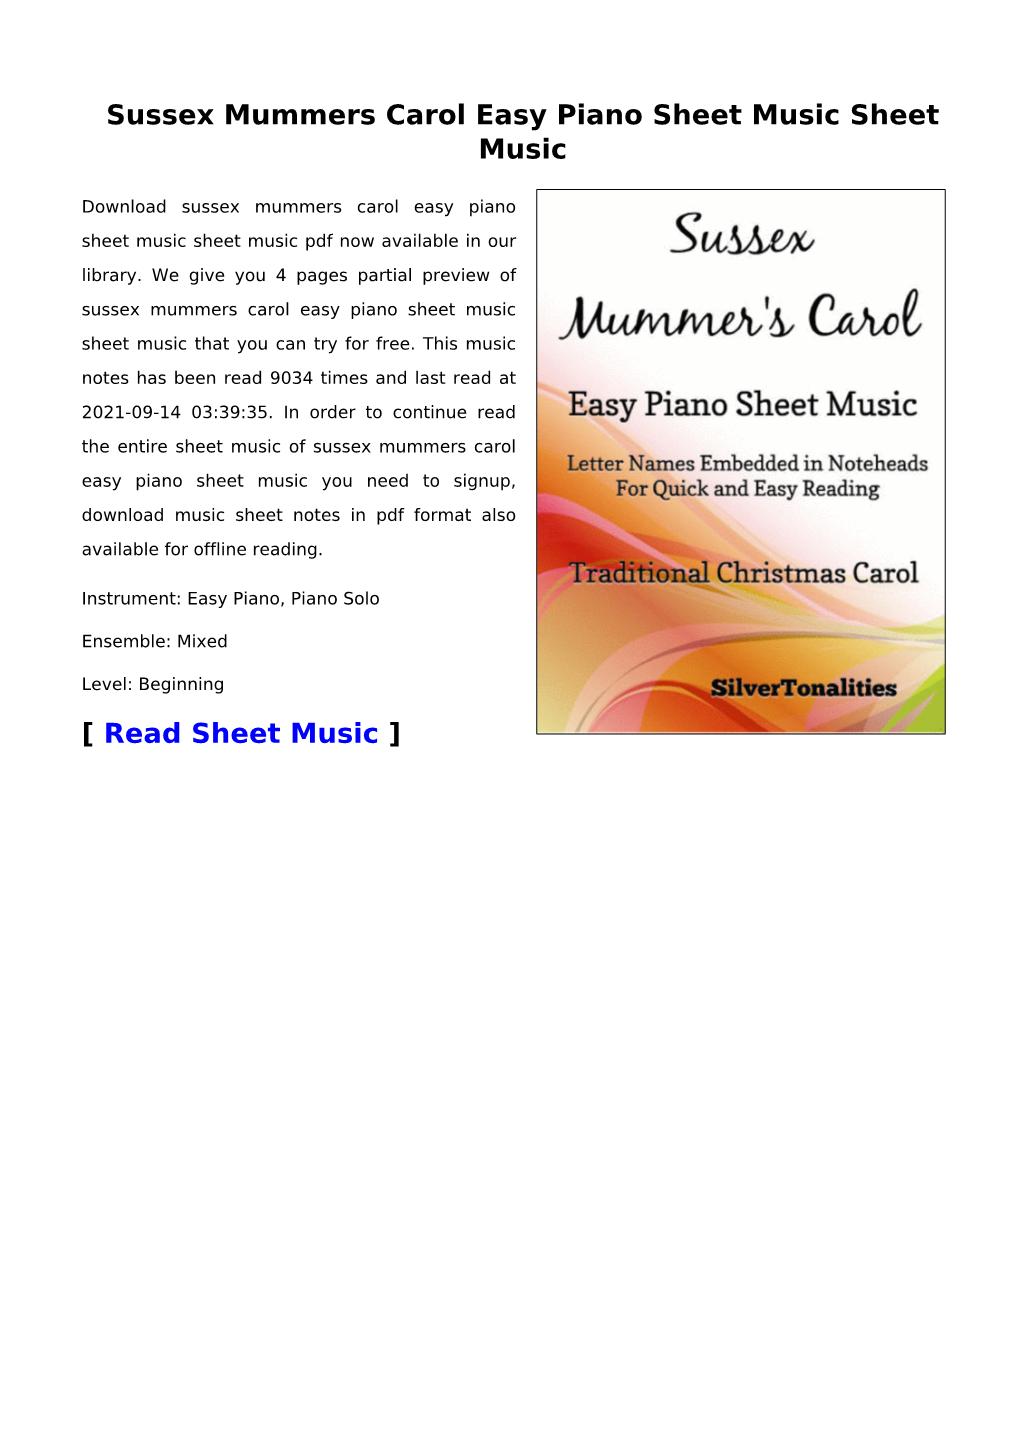 Sussex Mummers Carol Easy Piano Sheet Music Sheet Music